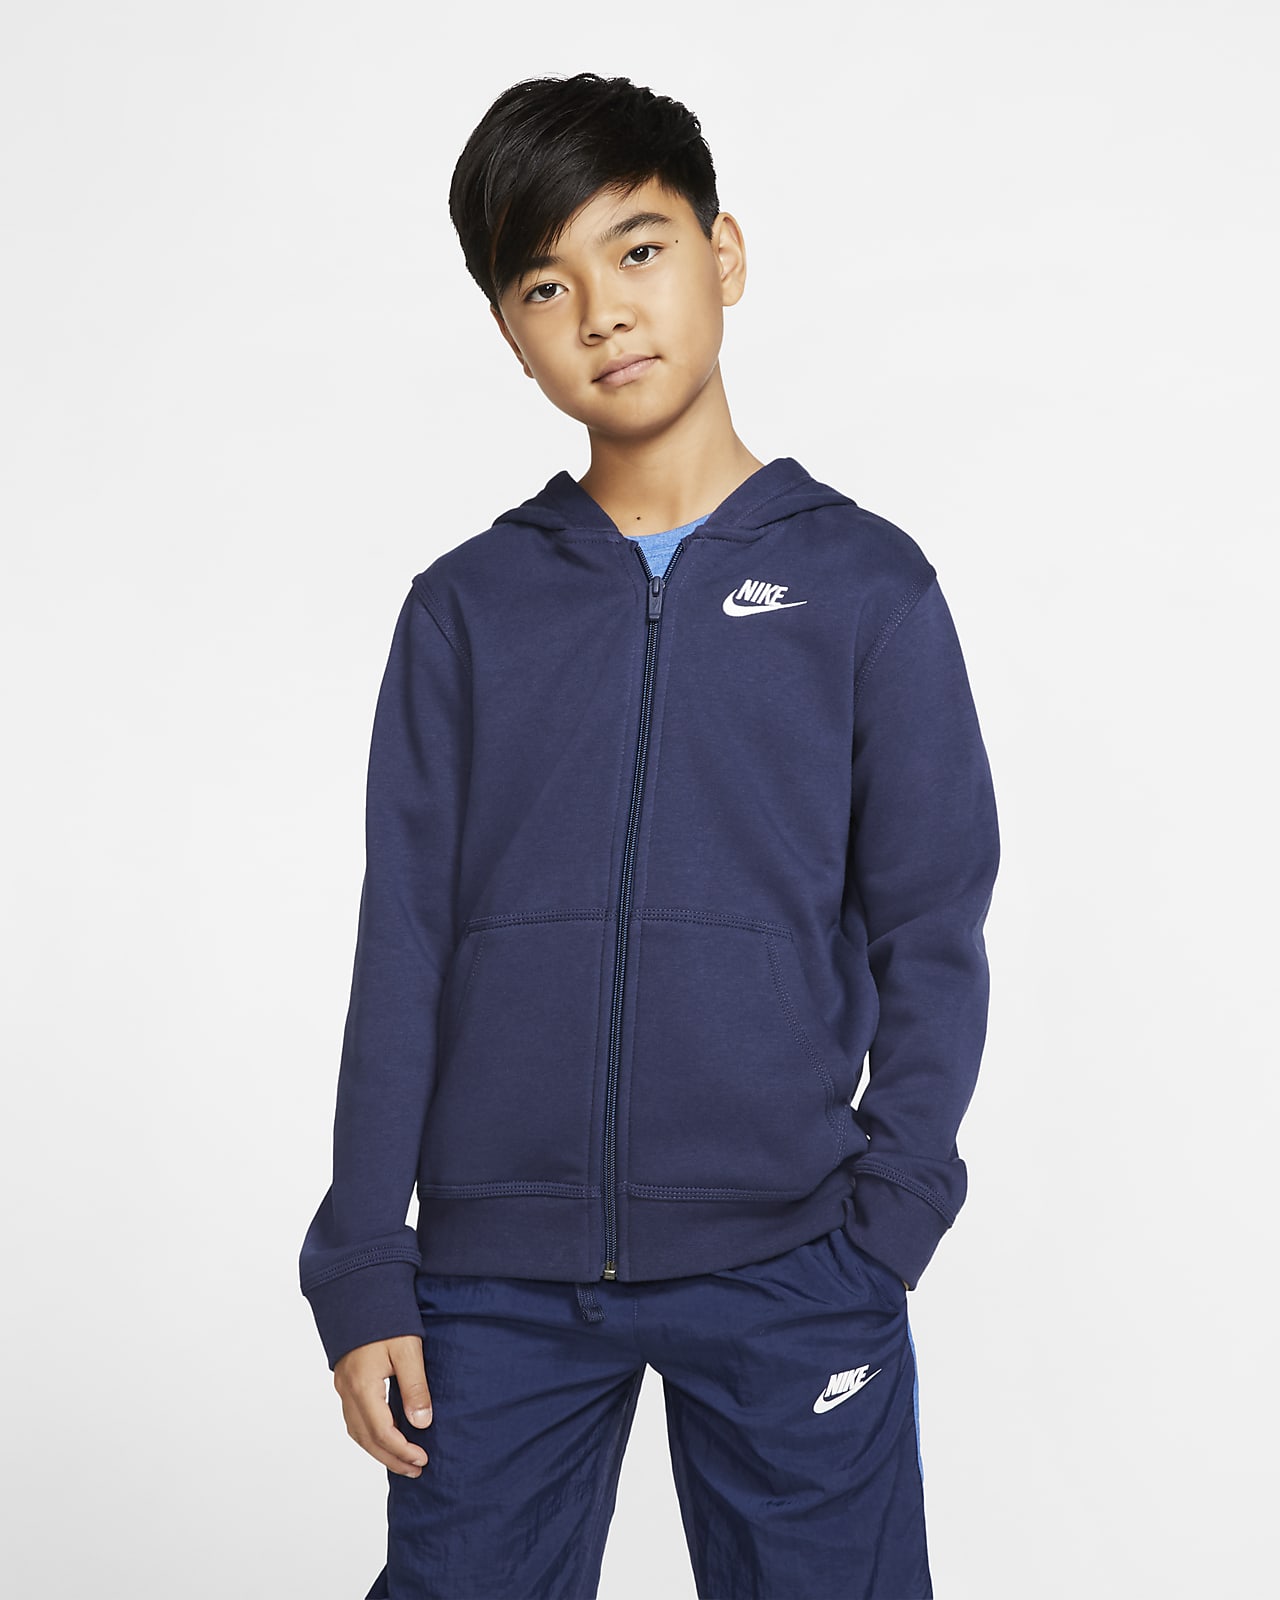 Nike Sportswear Club Dessuadora amb caputxa i cremallera completa - Nen/a